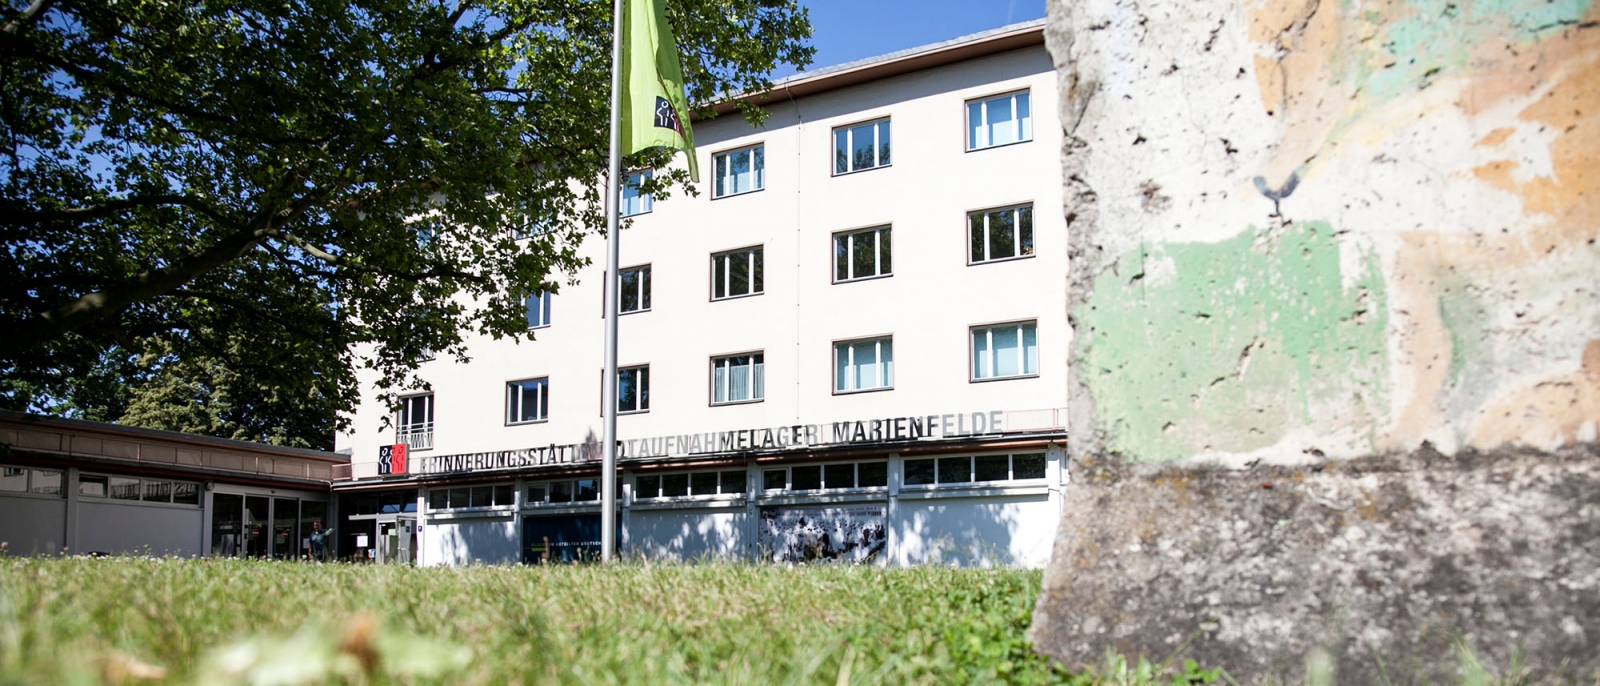 The Marienfelde Refugee Center Museum